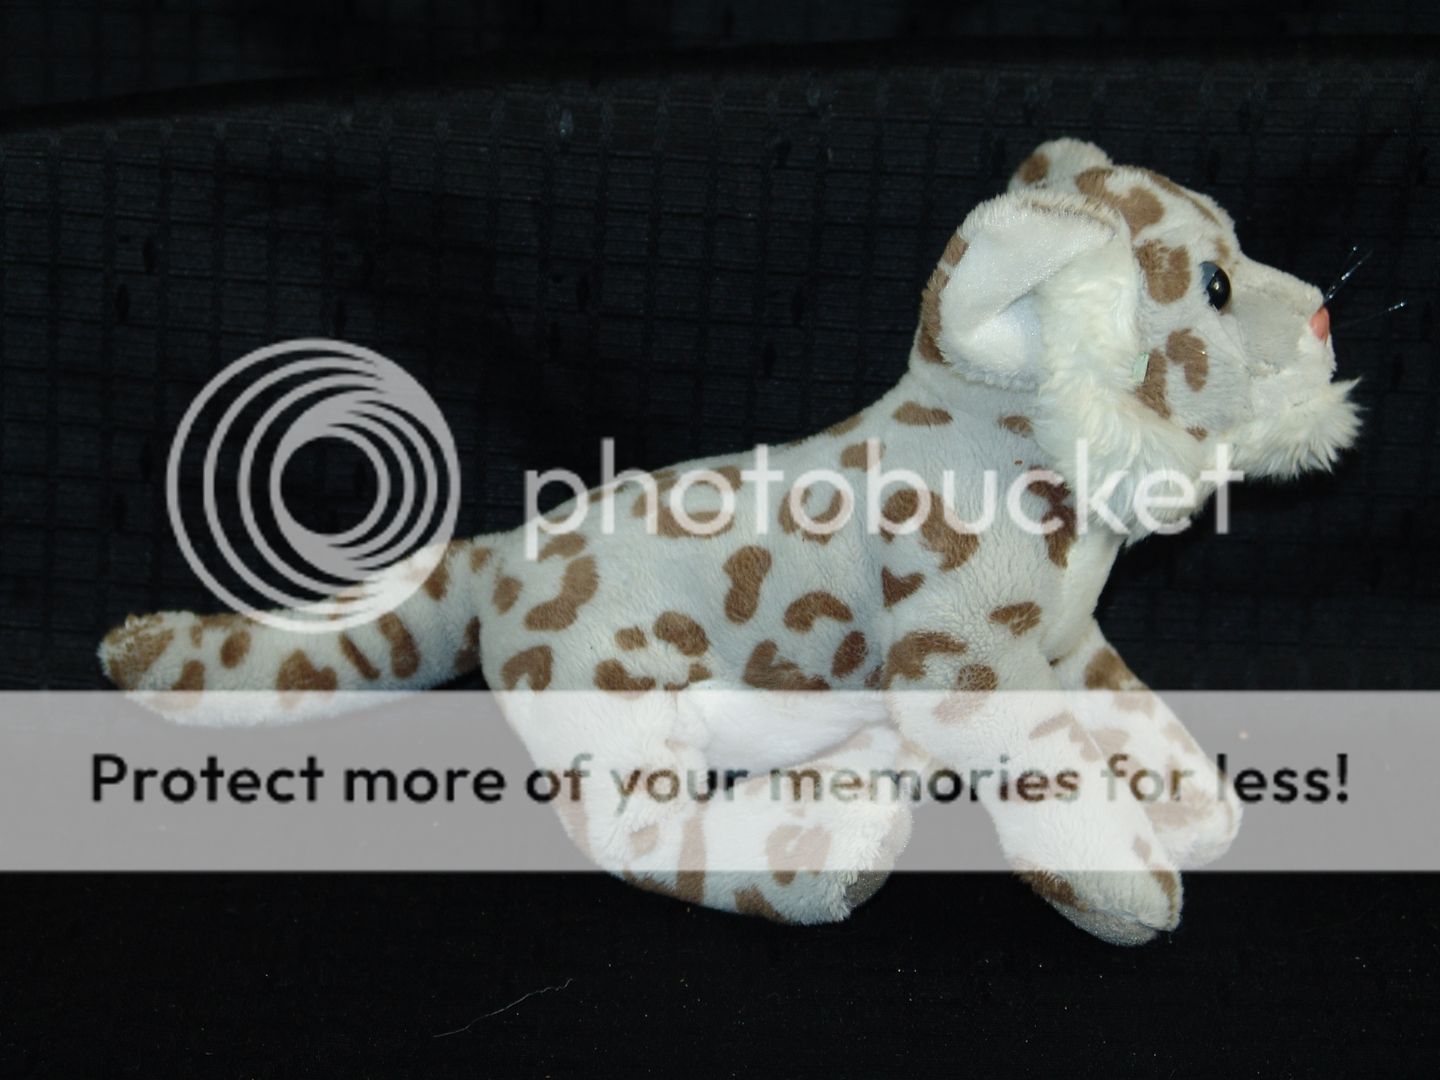 SOS Lifelike Plush Baby Snow Leopard Cub Stuffed Animal  